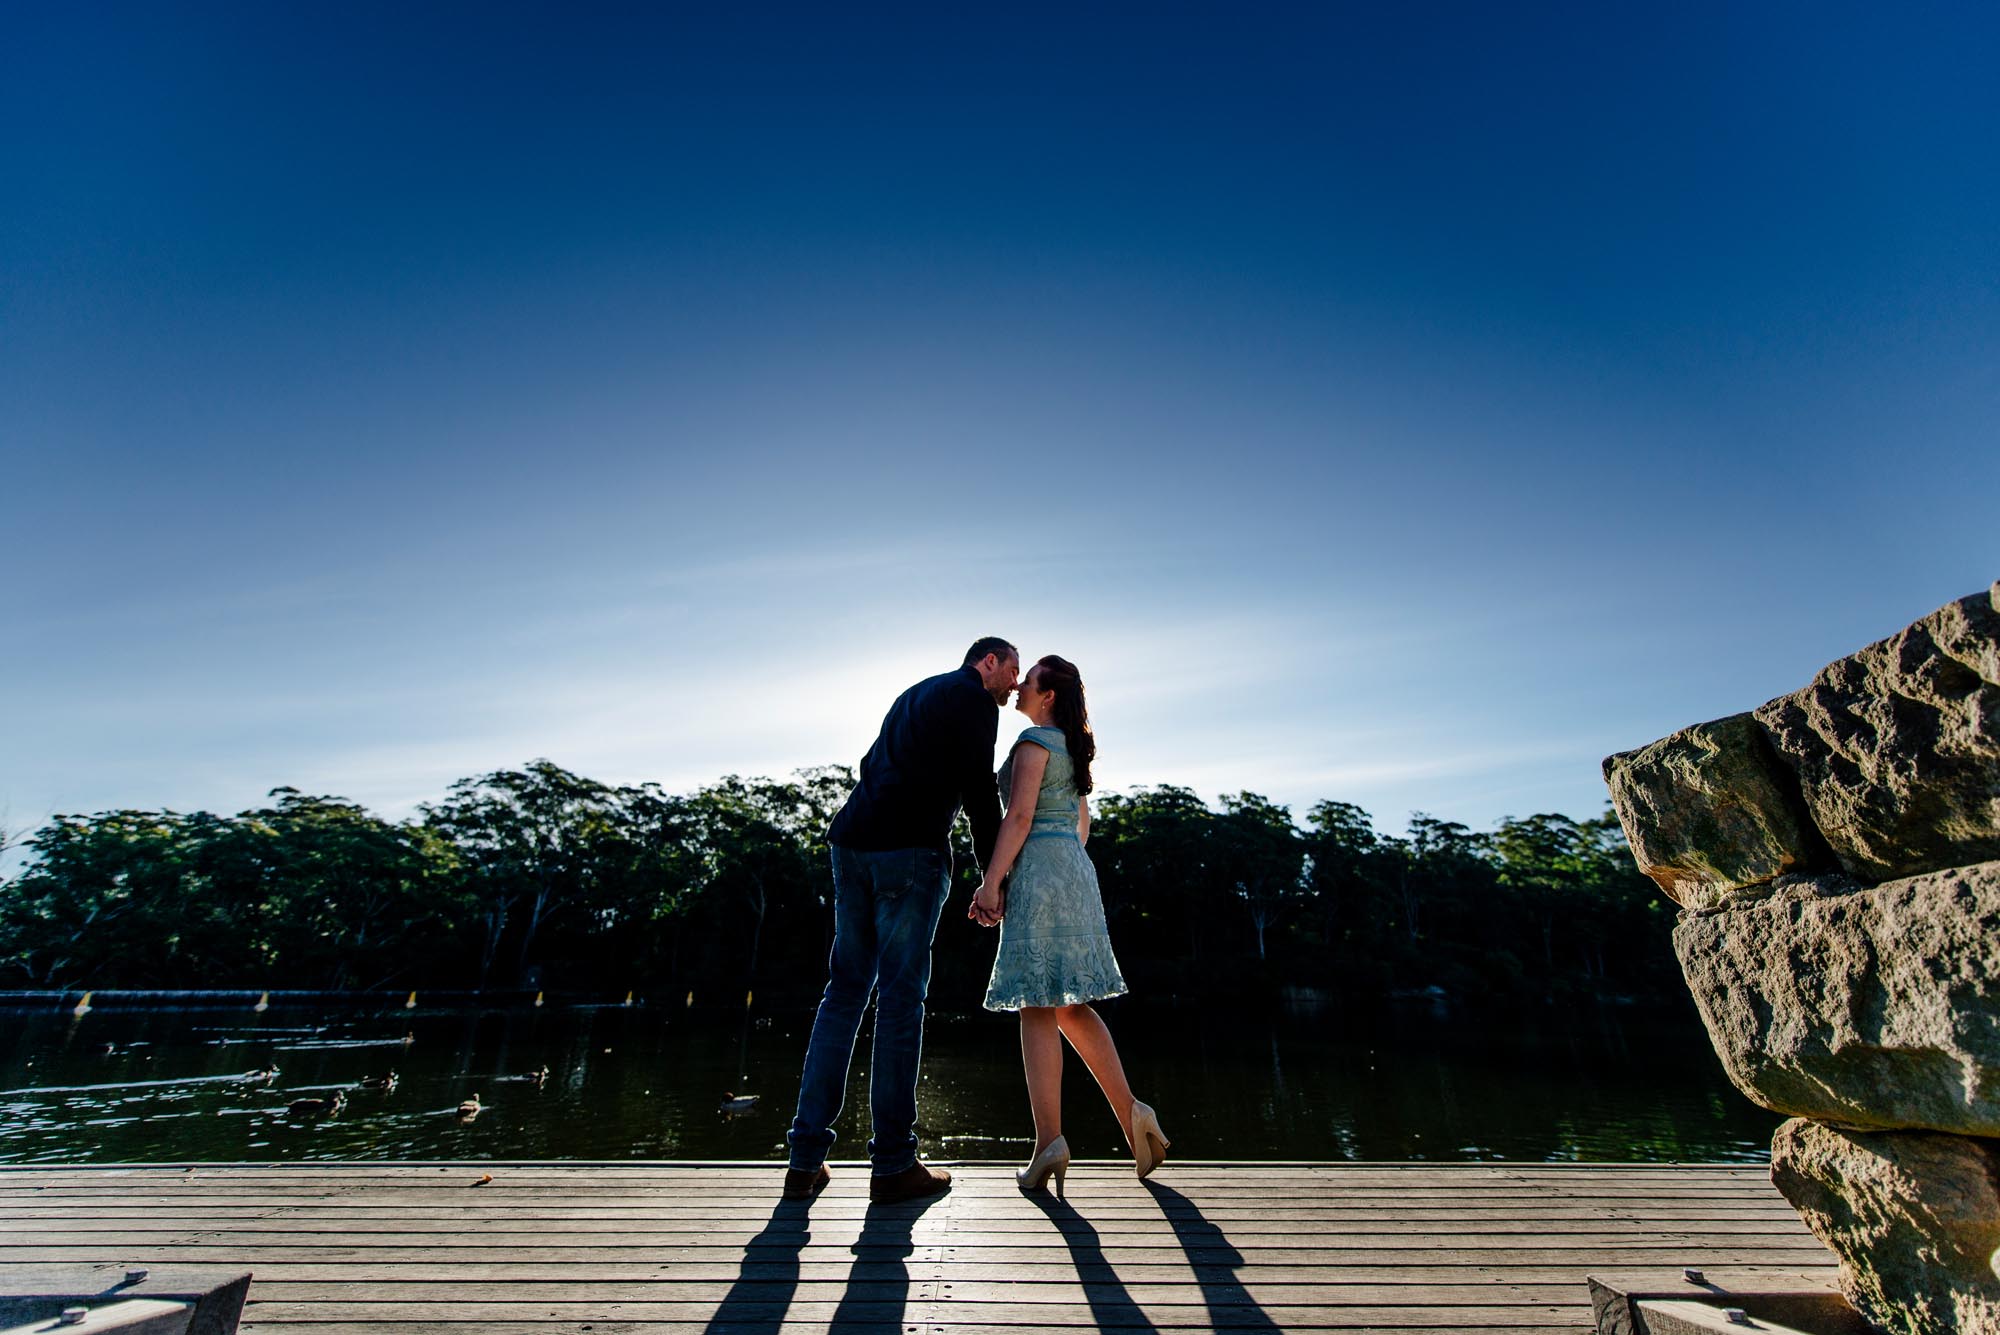 Neil and Emma at Lake Parramatta